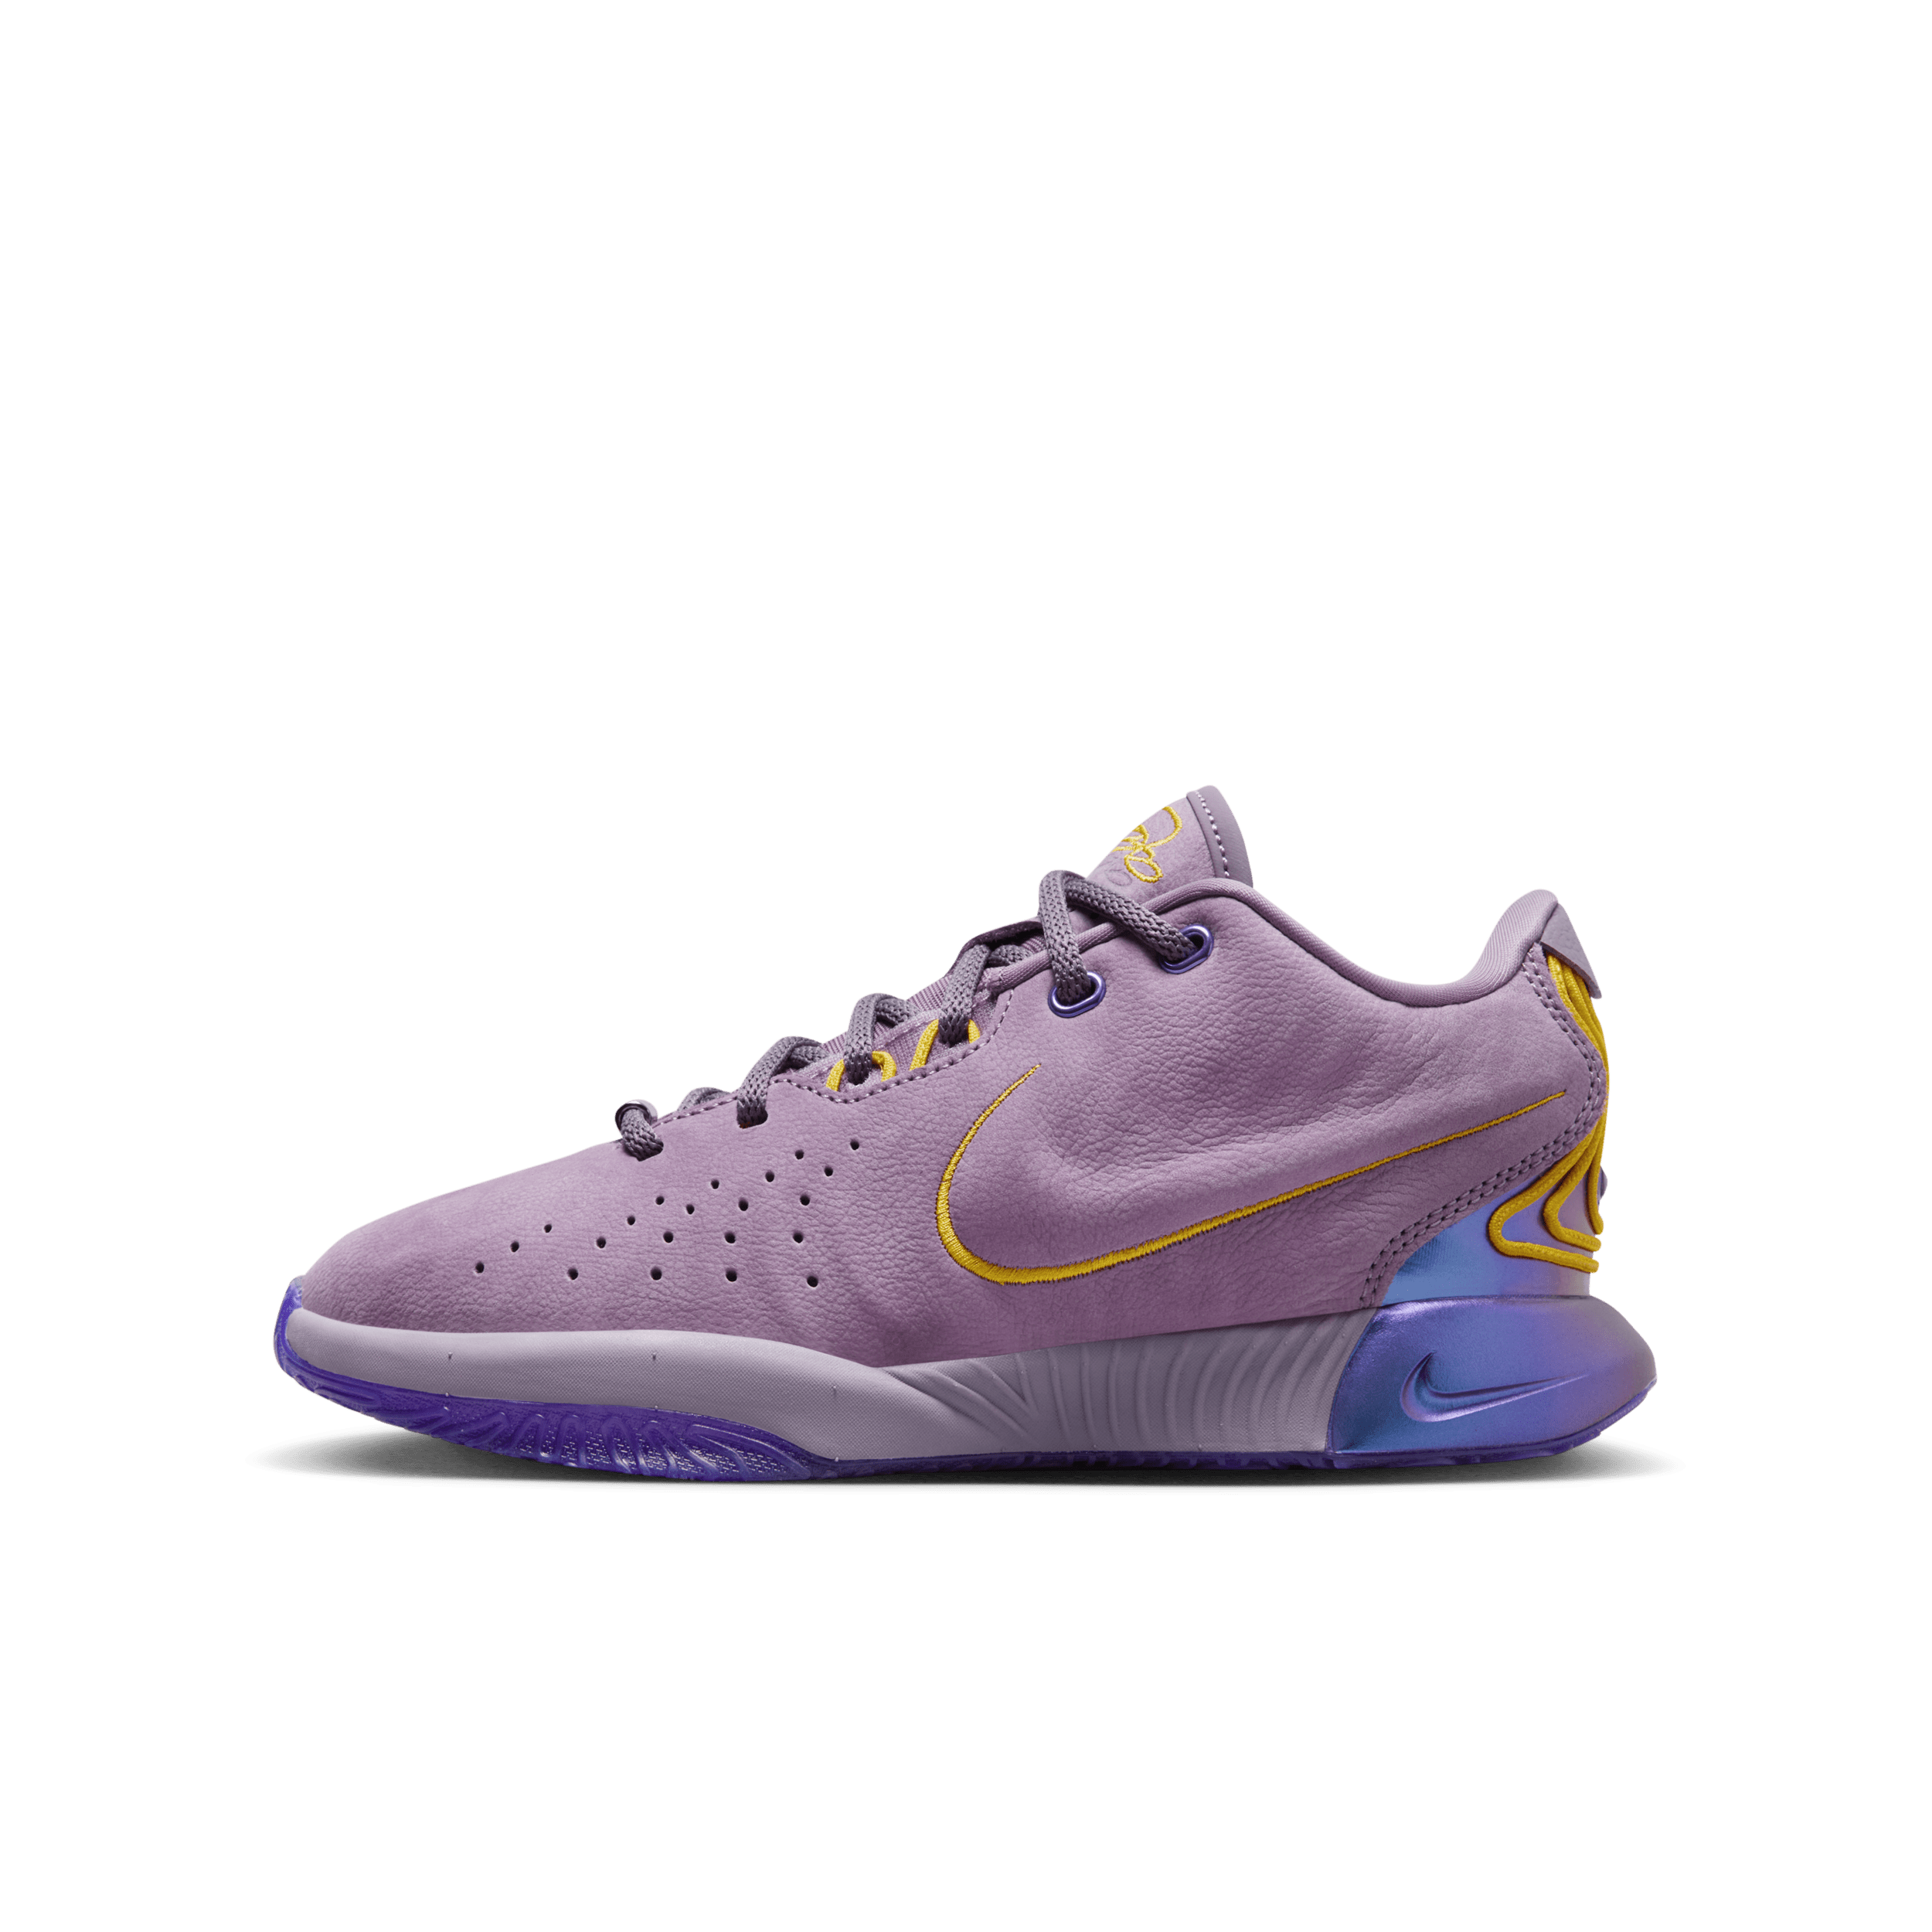 Nike LeBron XXI 'Freshwater' basketbalschoenen voor kids - Paars